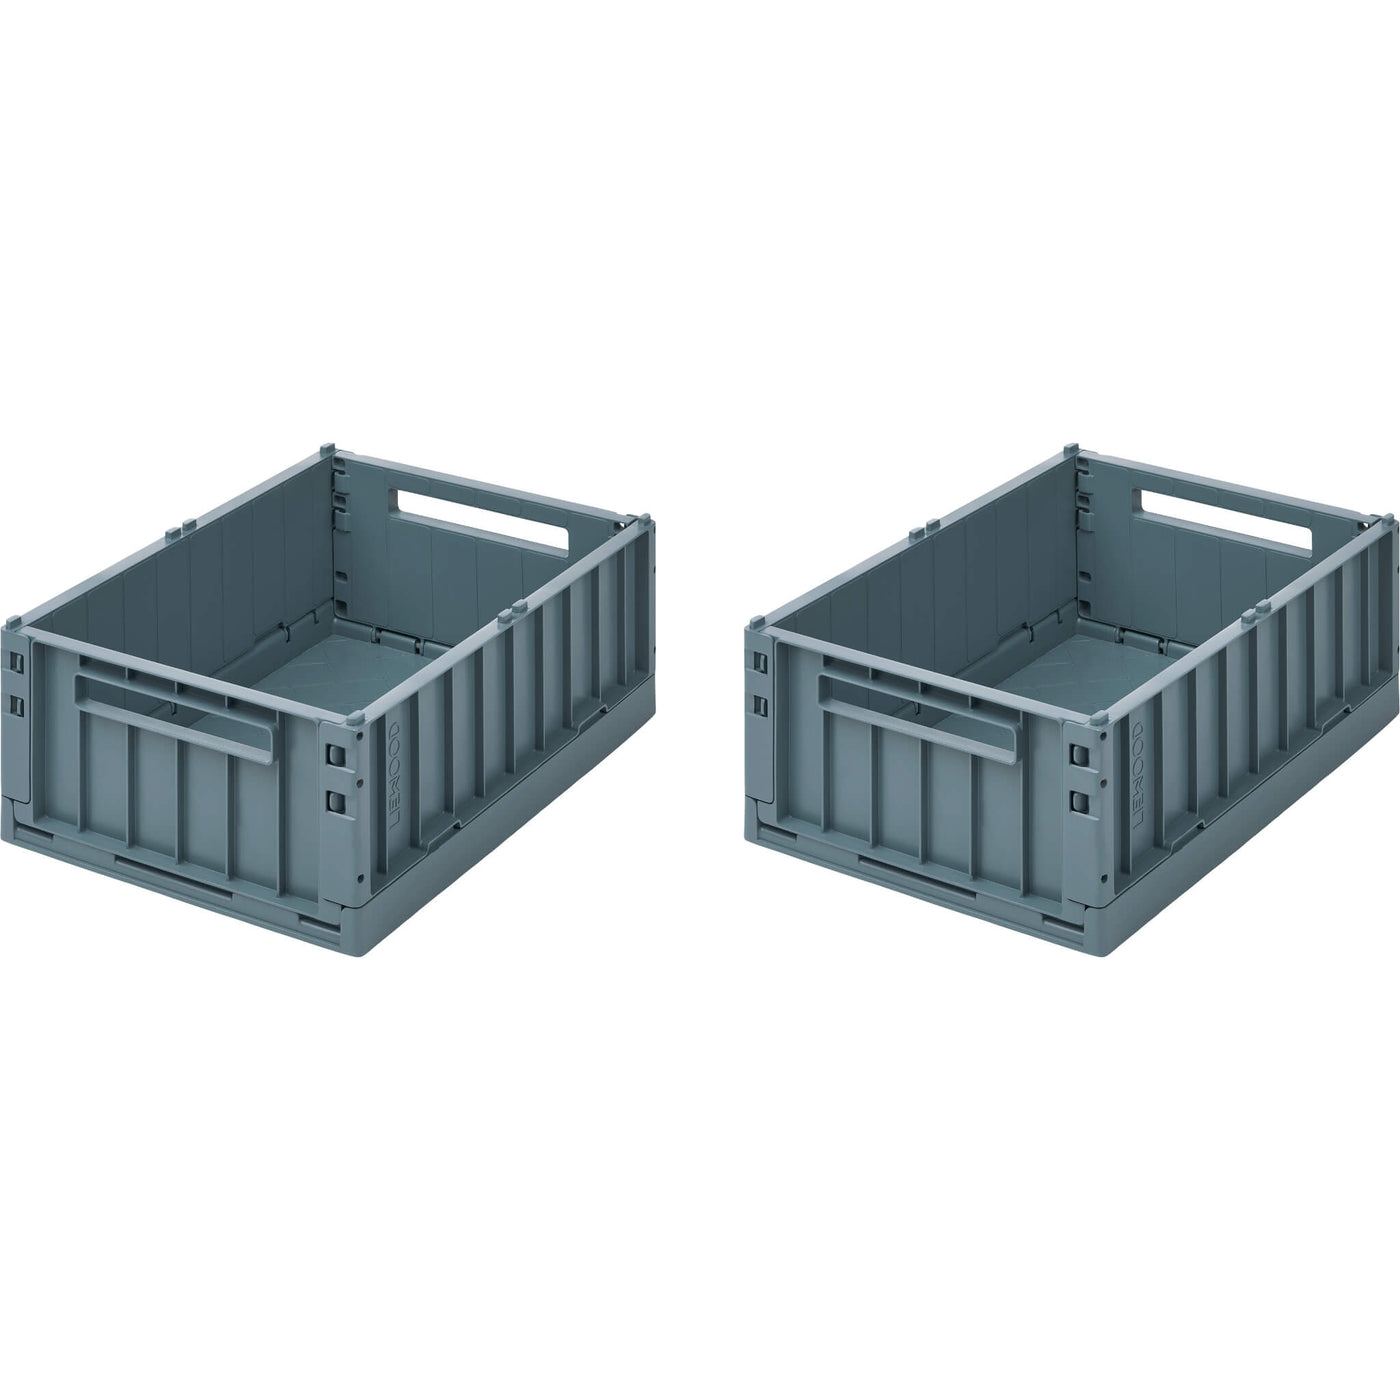 Weston Storage Folding Box - Whale Blue - Medium (2 pack)